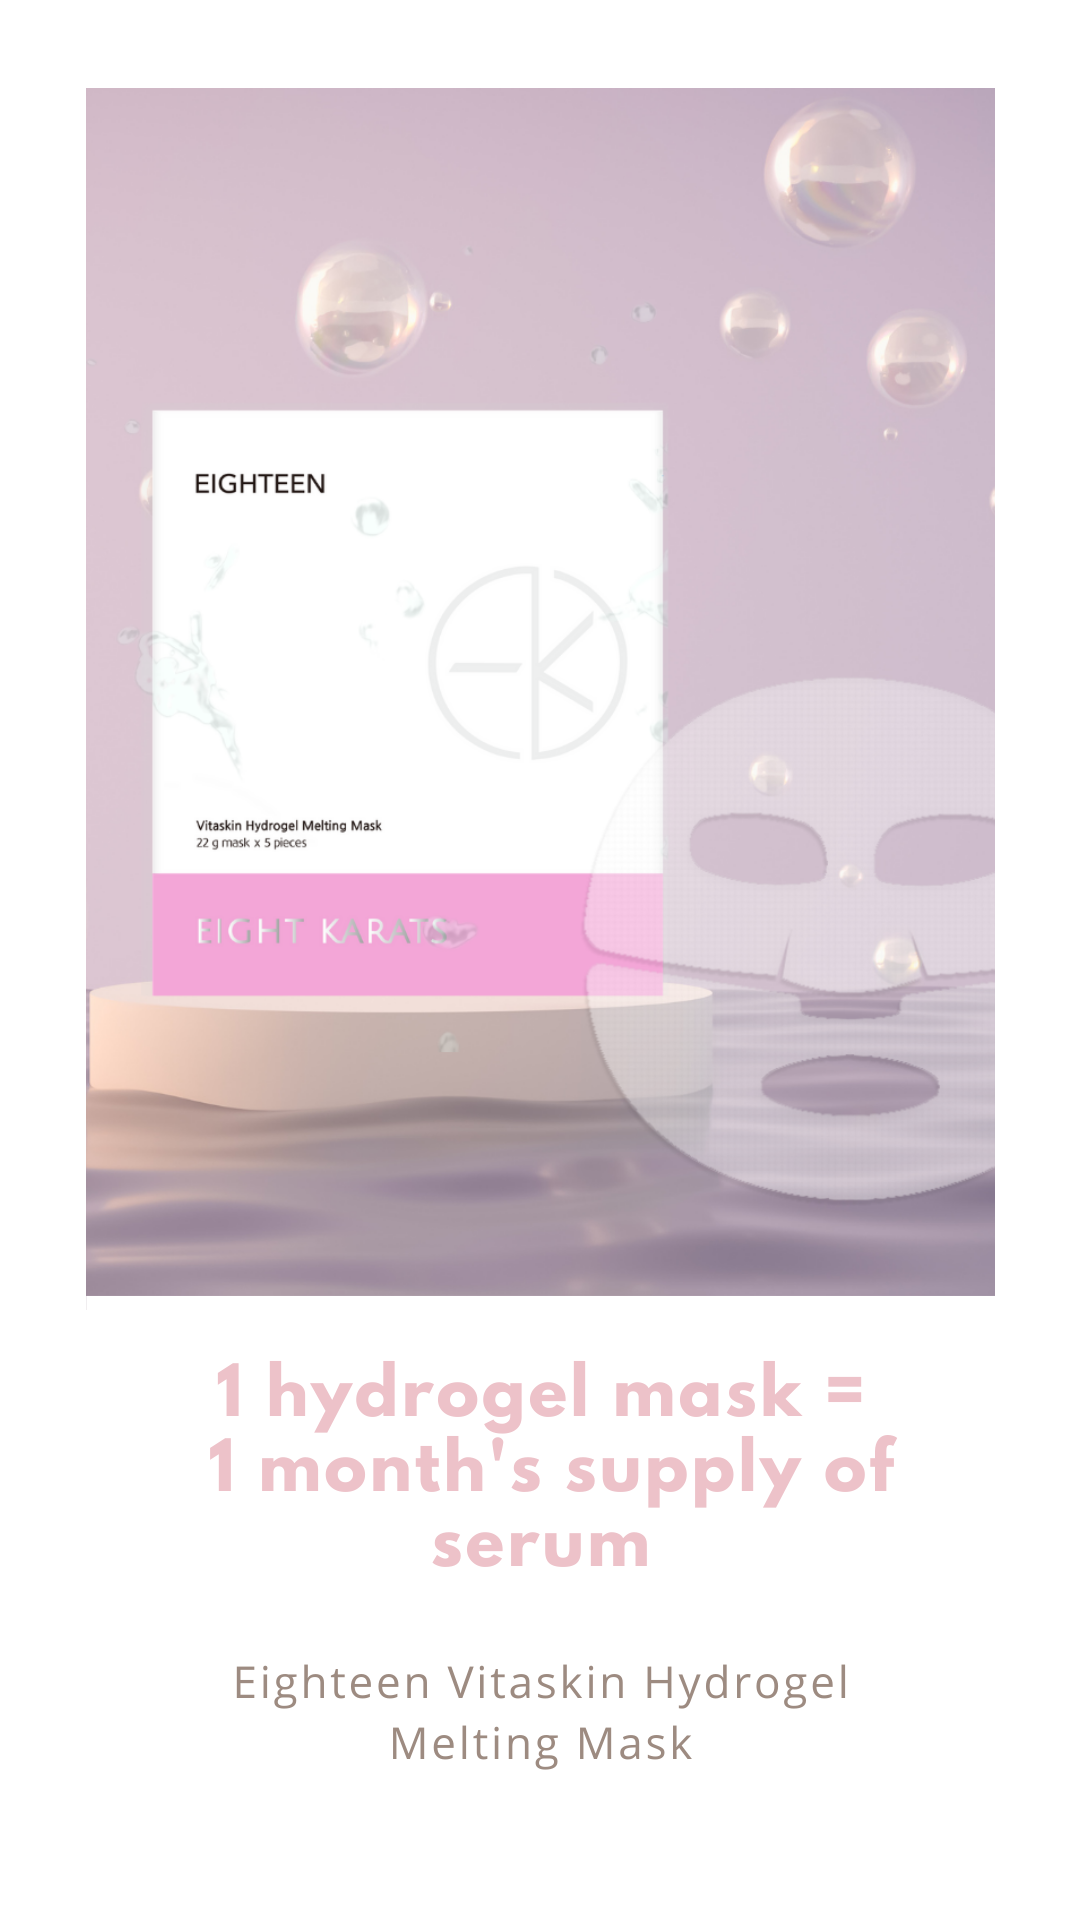 Eighteen Vitaskin Hydrogel Melting Mask - KURATES SINGAPORE